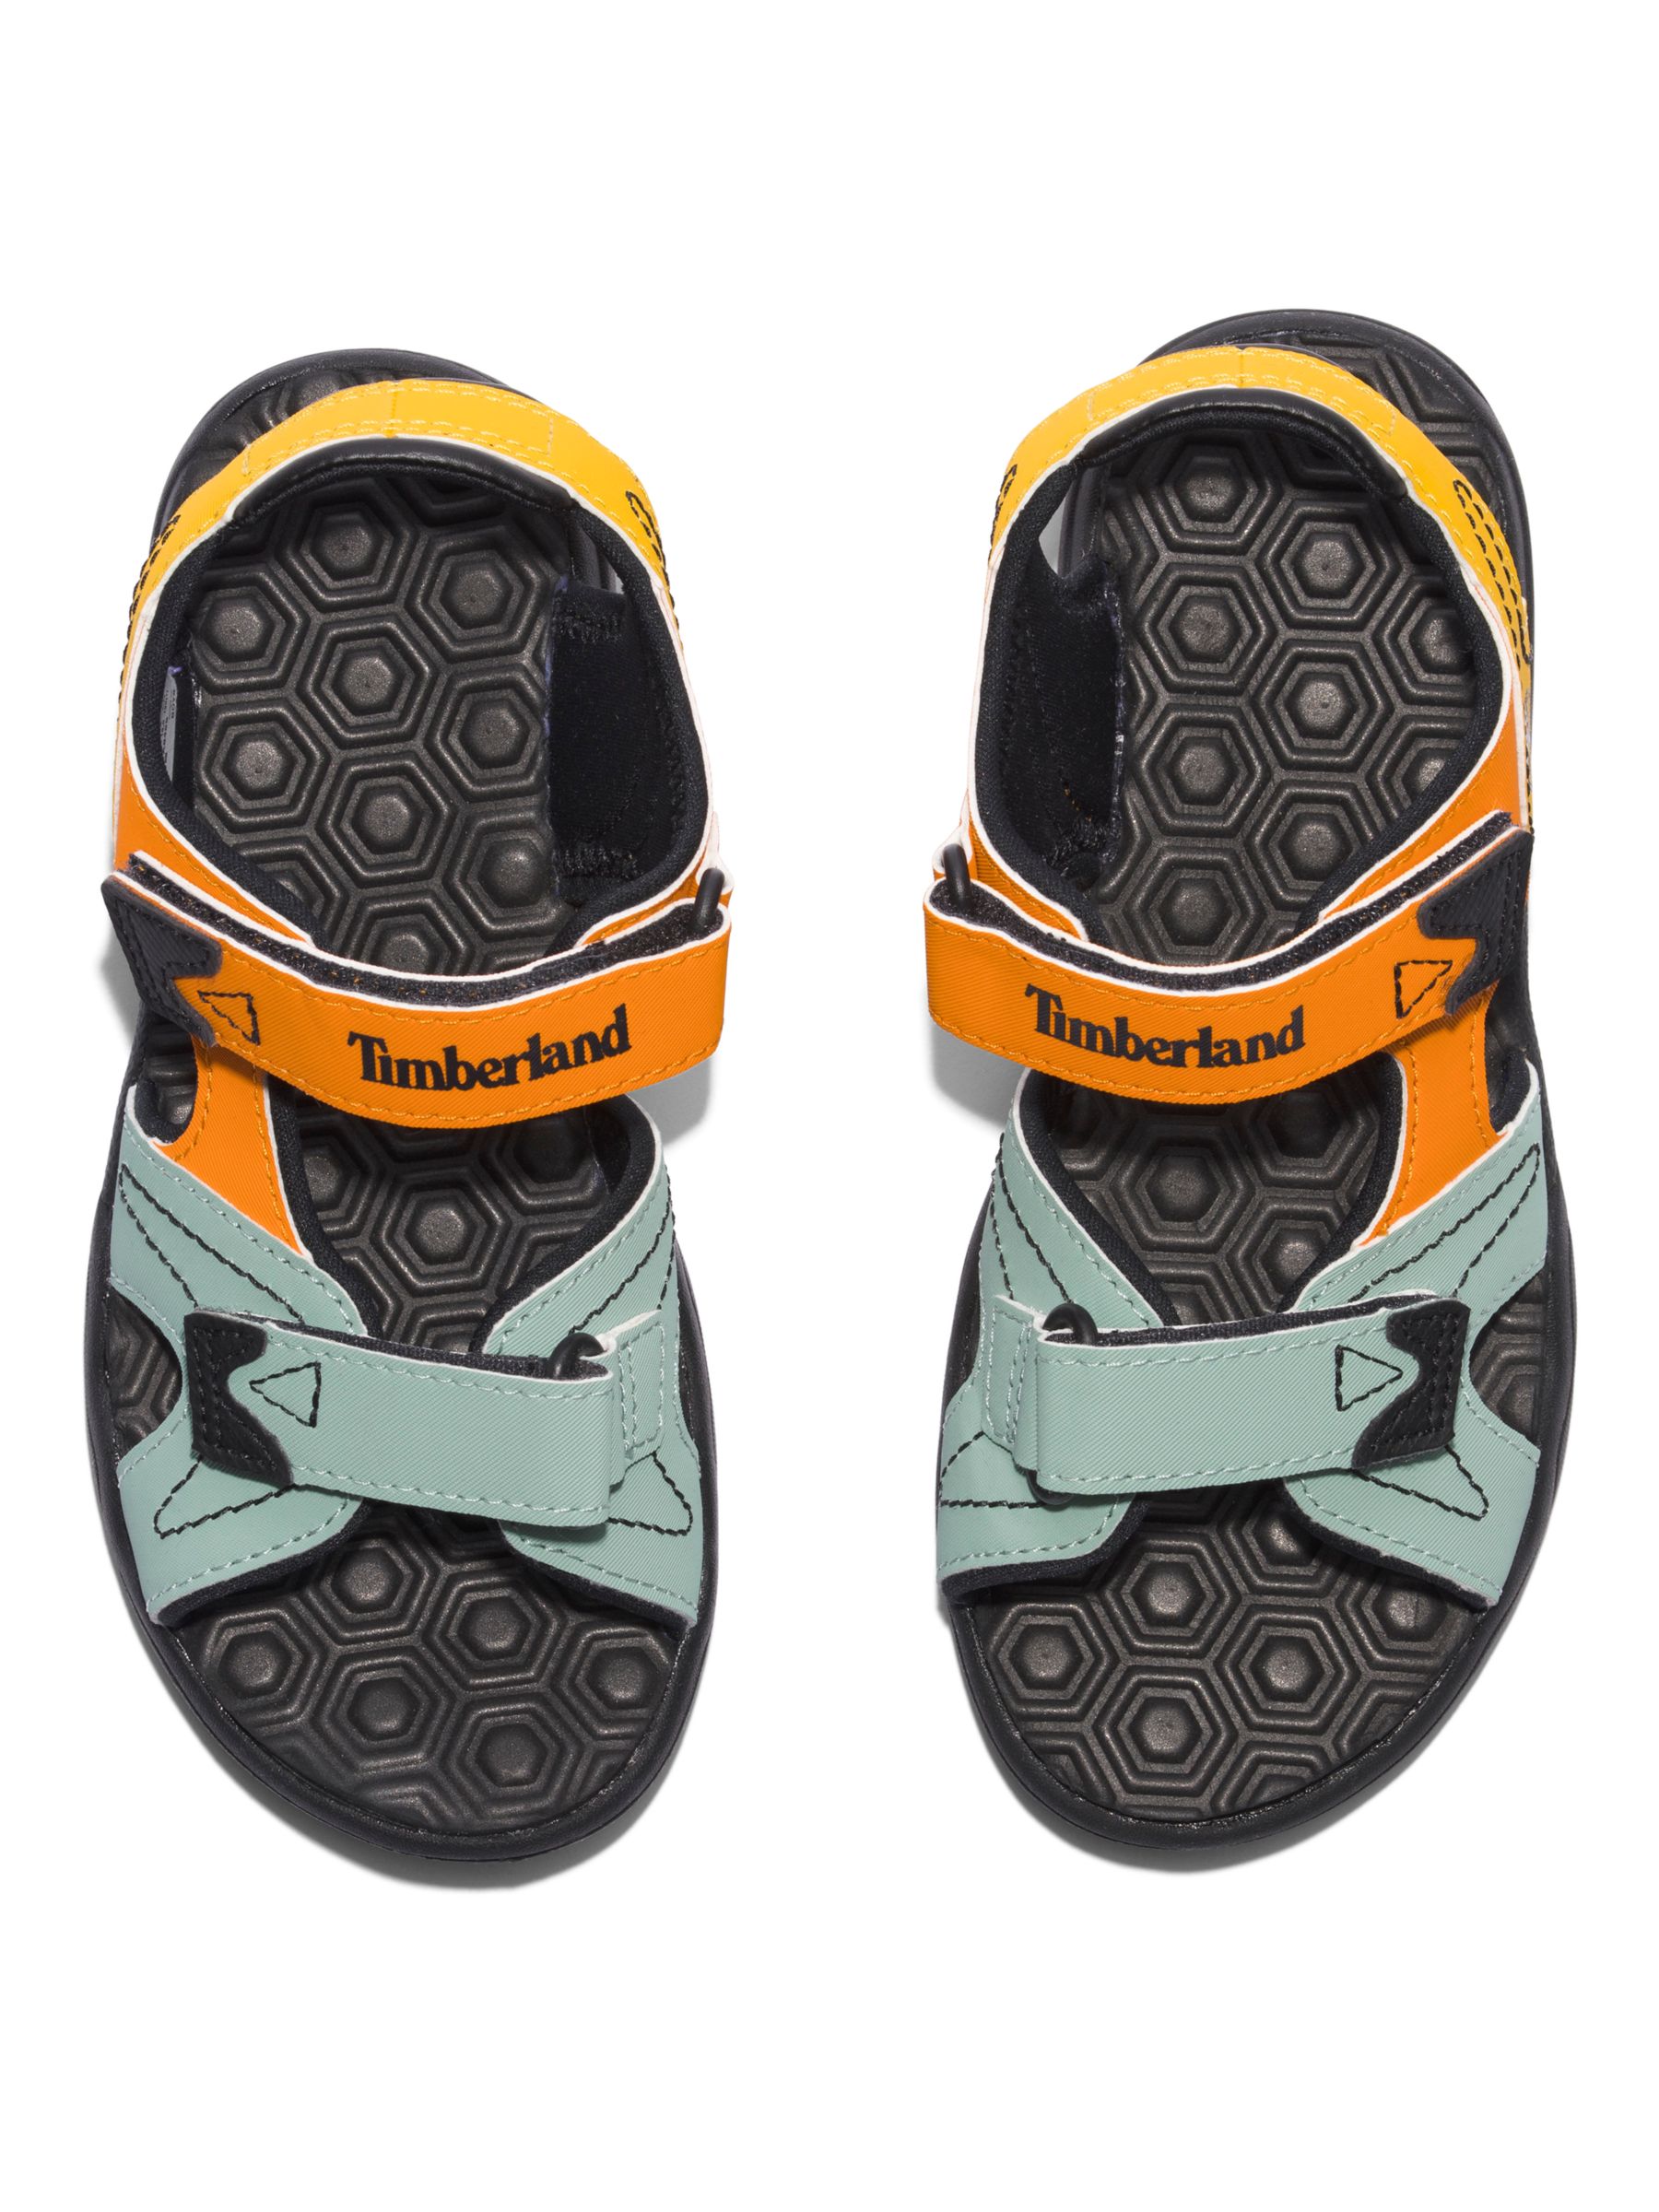 Timberland Kids' Adventure Seeker Sandals, Multi, 28